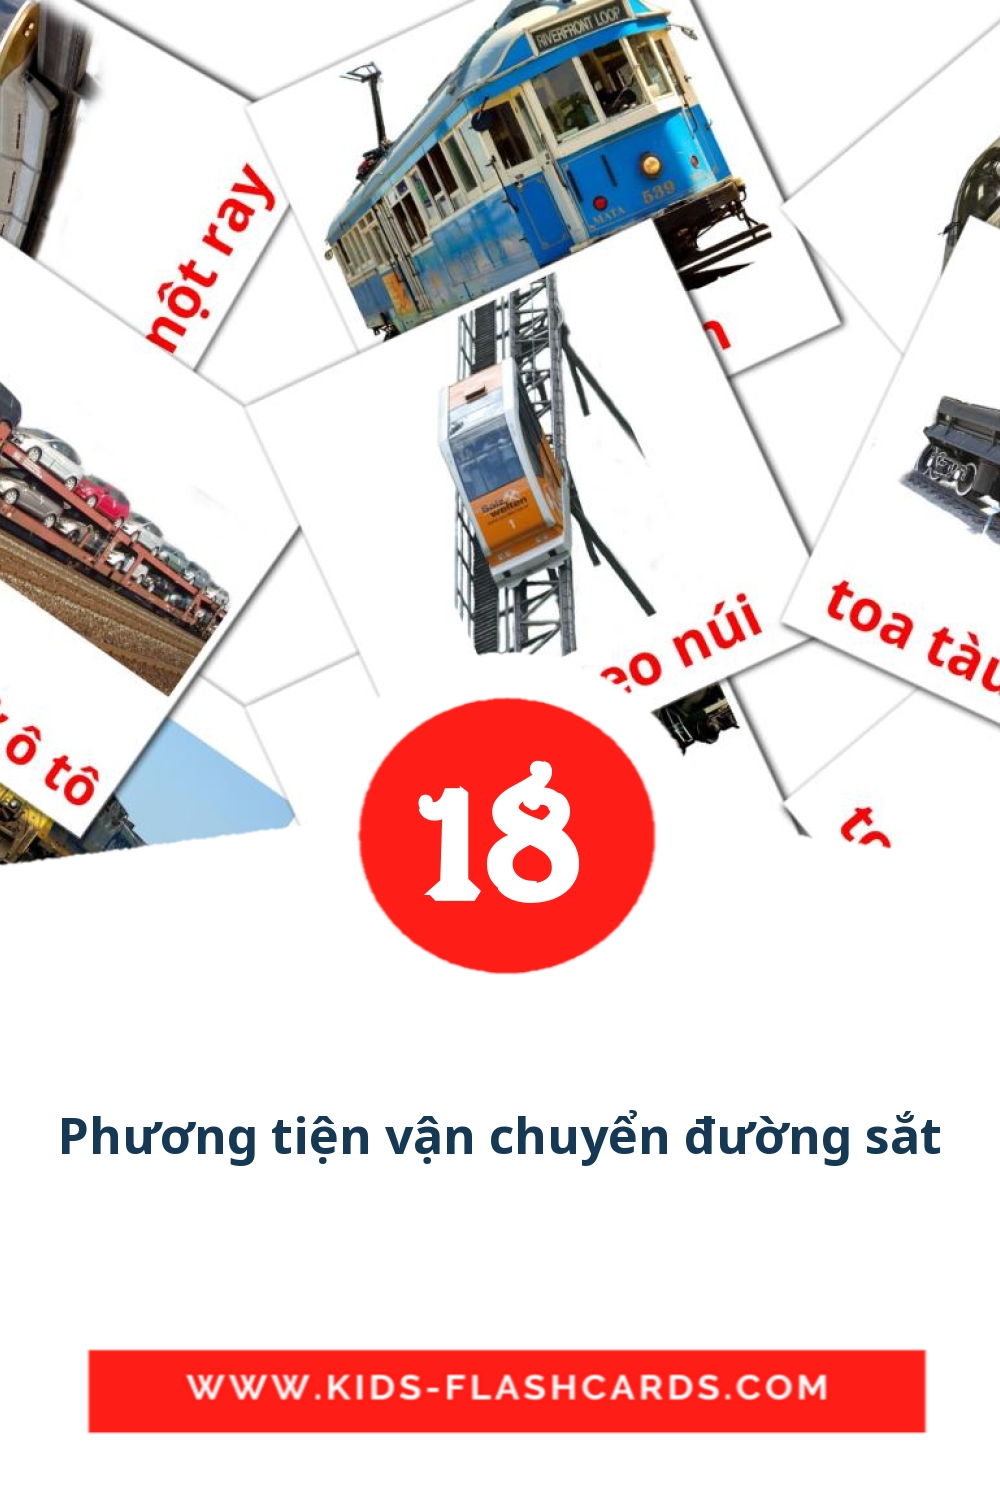 18 Phương tiện vận chuyển đường sắt fotokaarten voor kleuters in het vietnamese